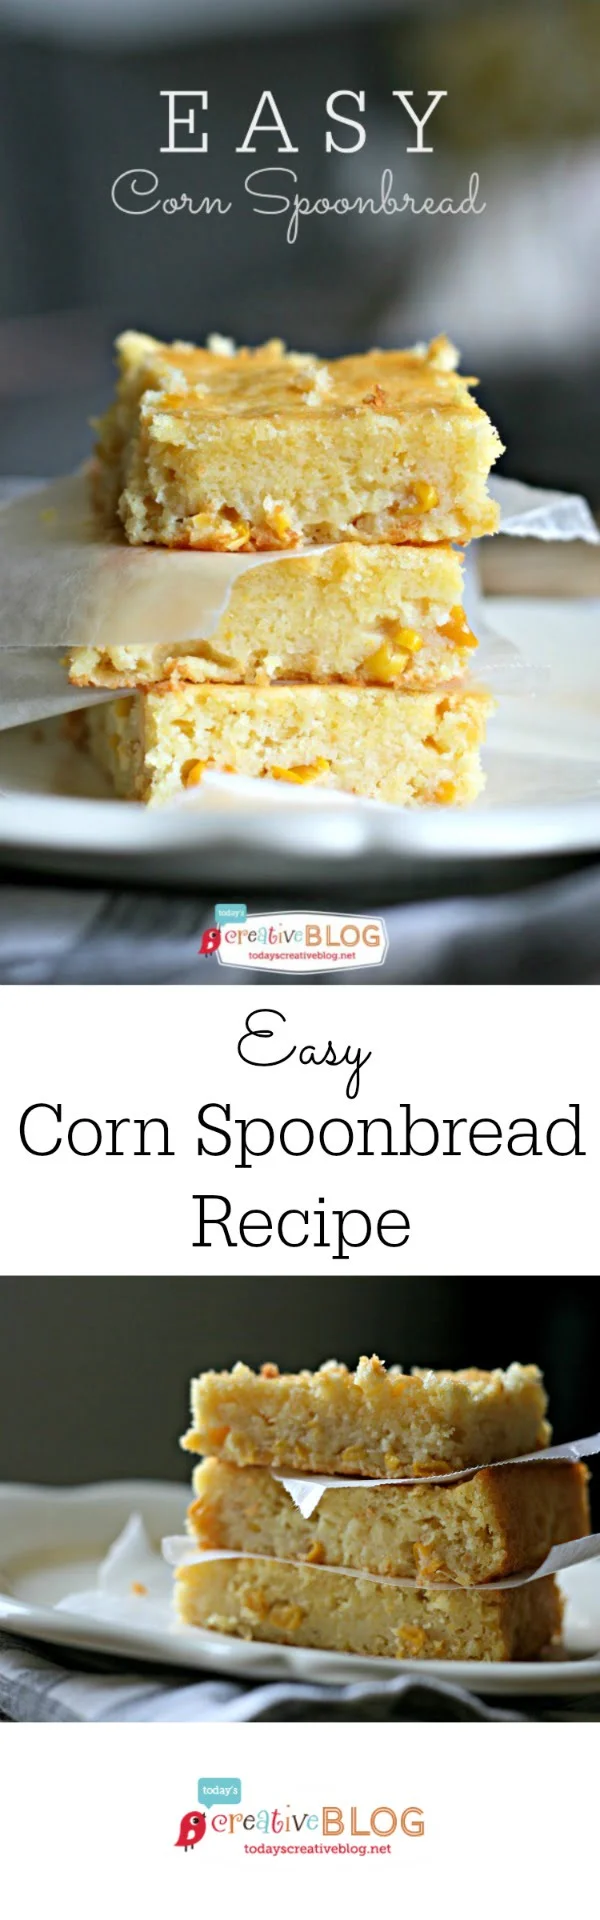 Easy Spoonbread Recipe on Today's Creative Blog